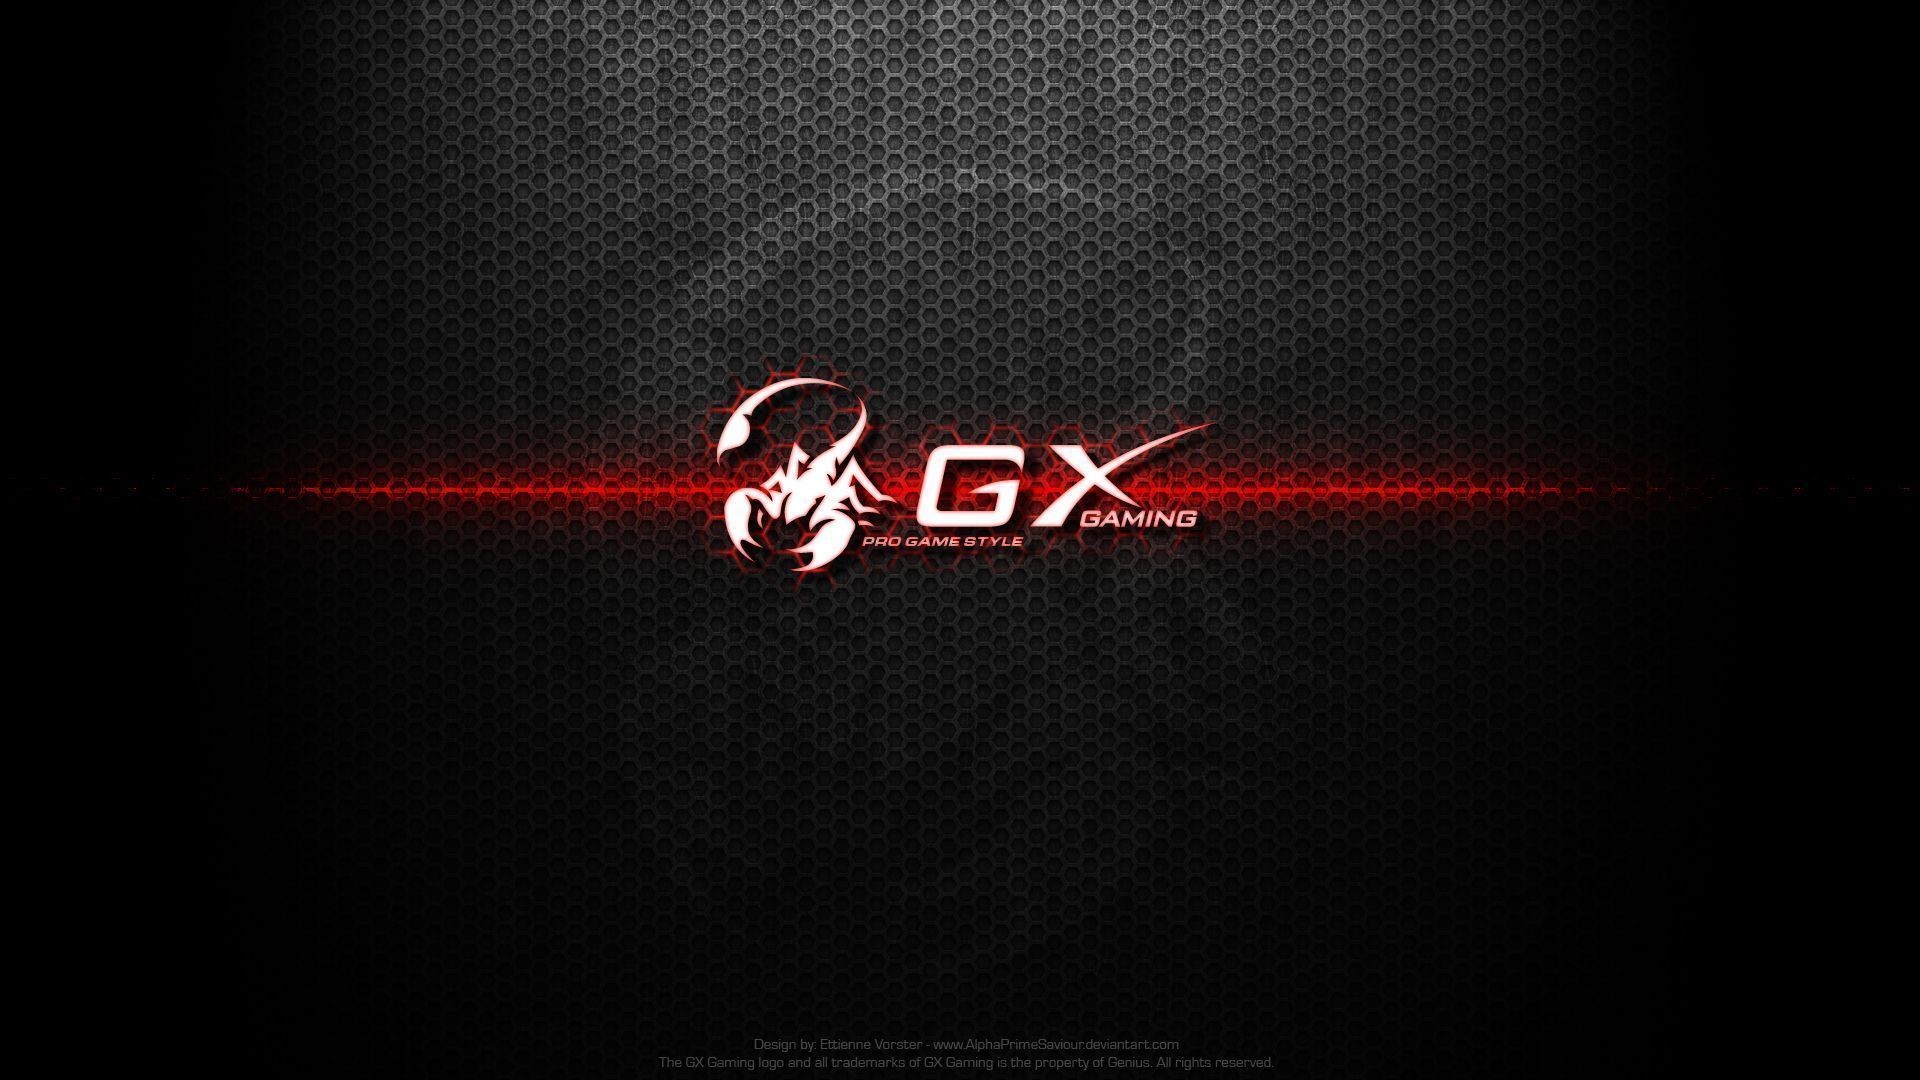 1920x1080 DeviantArt: More Like GX Gaming Wallpaper HD 02 by AlphaPrimeSaviour